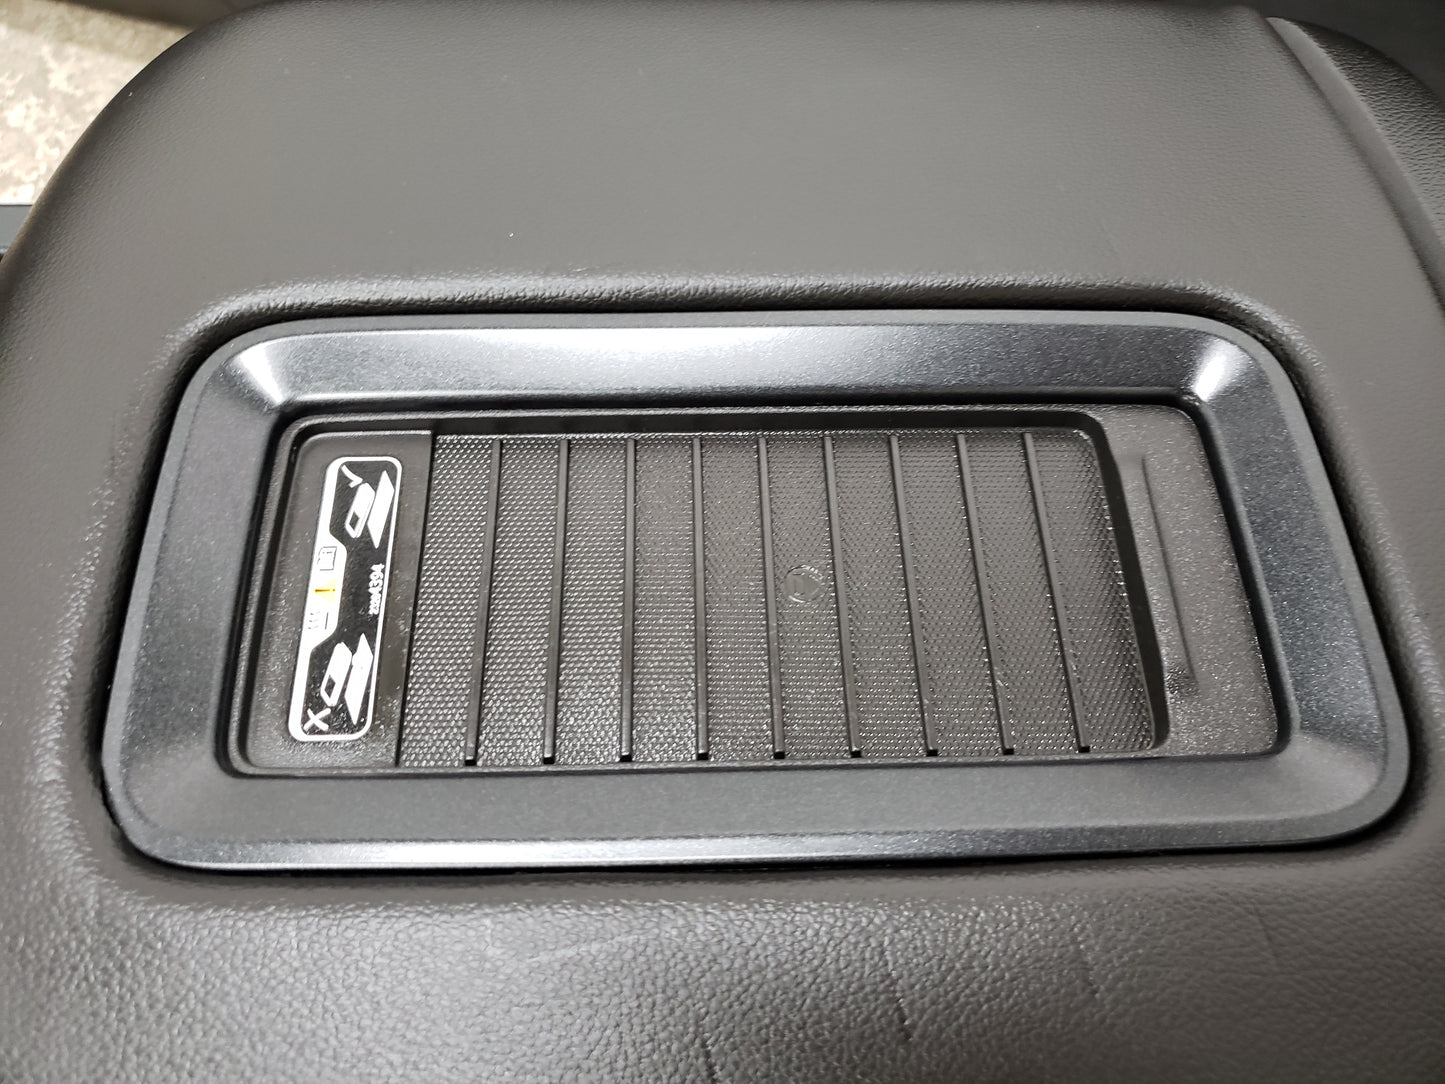 Chev Silverado 2017 Double Cab BLACK LEATHER Seats Interior LTZ GMC Sierra